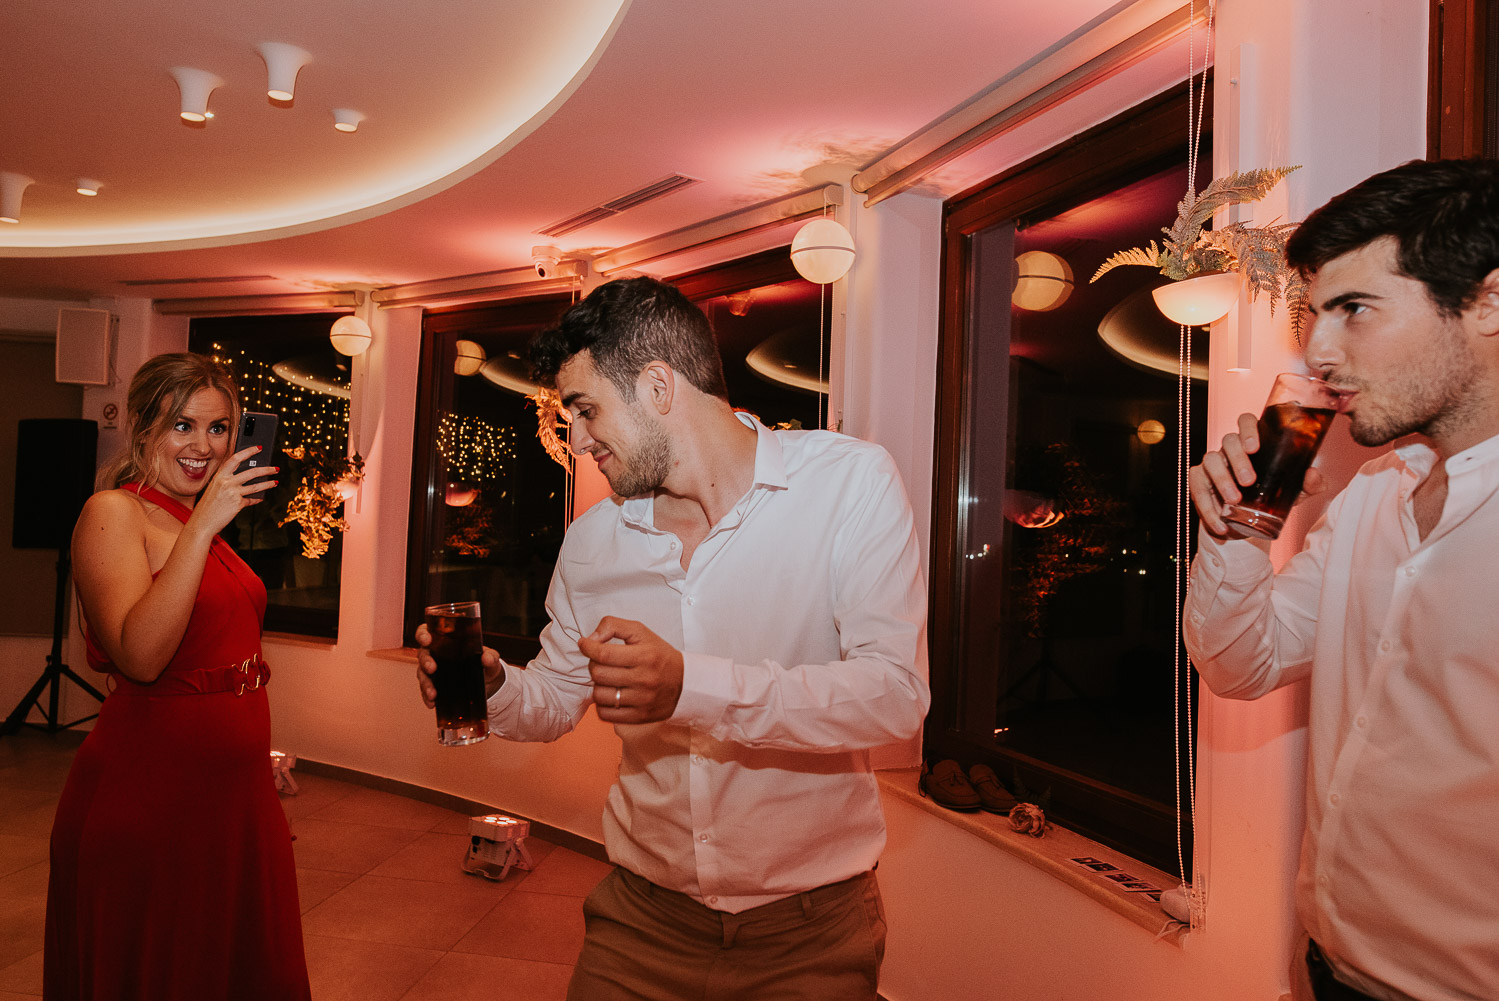 Wedding photographer Santorini: guests dancing and having drinks on the dance floor by Ben and Vesna.